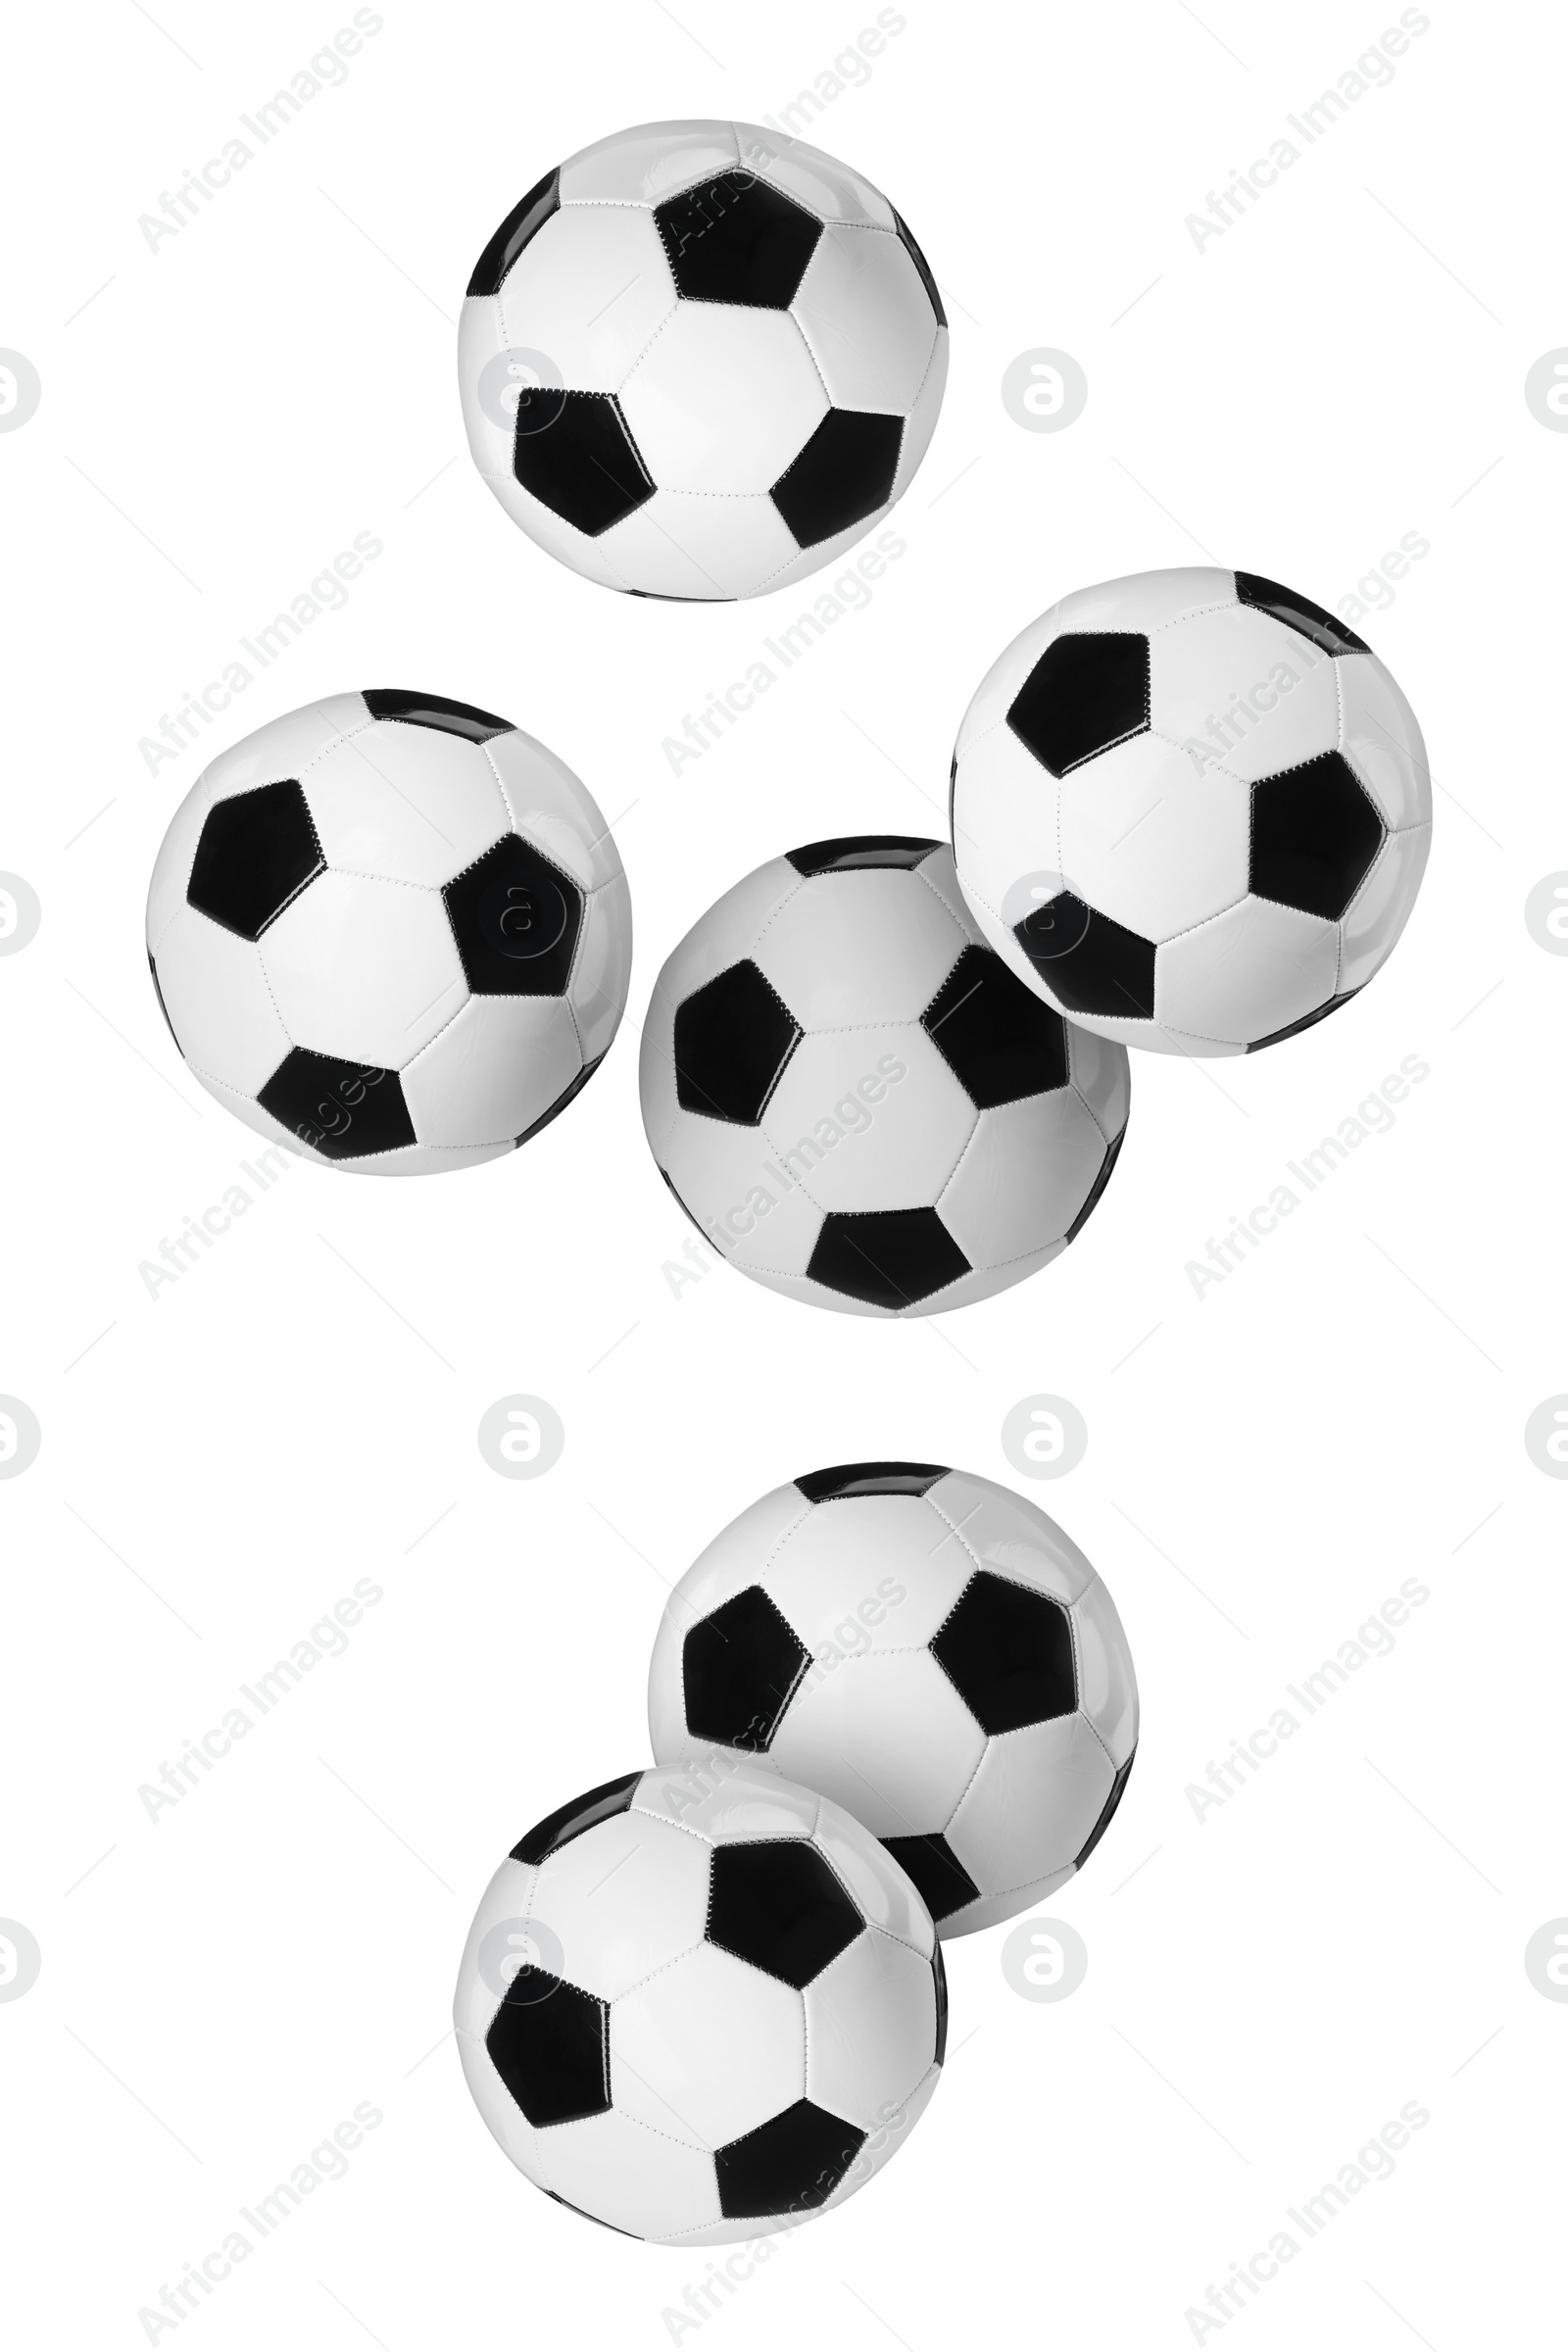 Image of Many soccer balls flying on white background